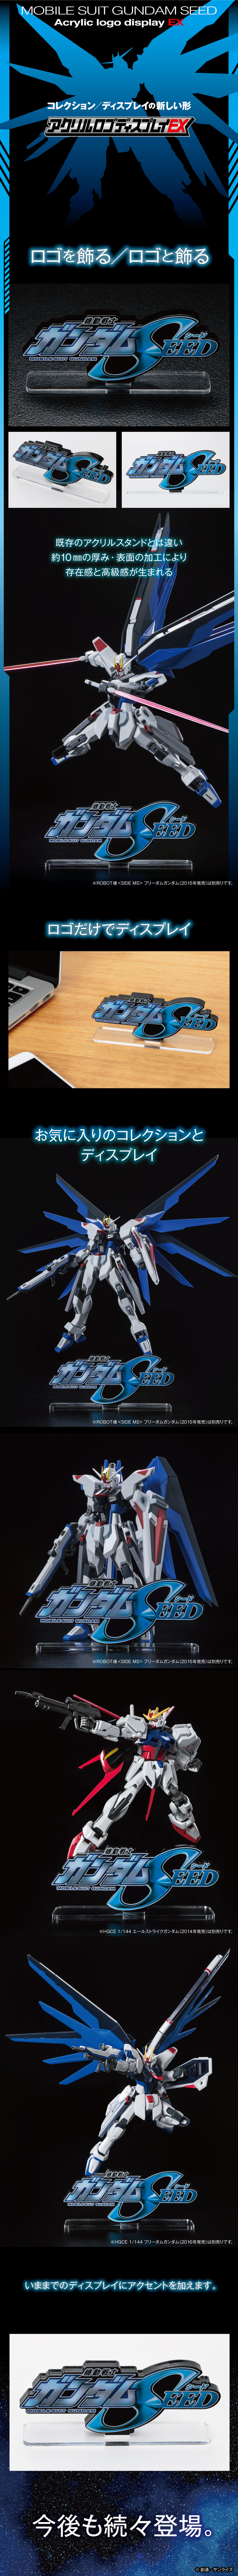 Acrylic Logo Diplay EX-Mobile Suit Gundam Seed